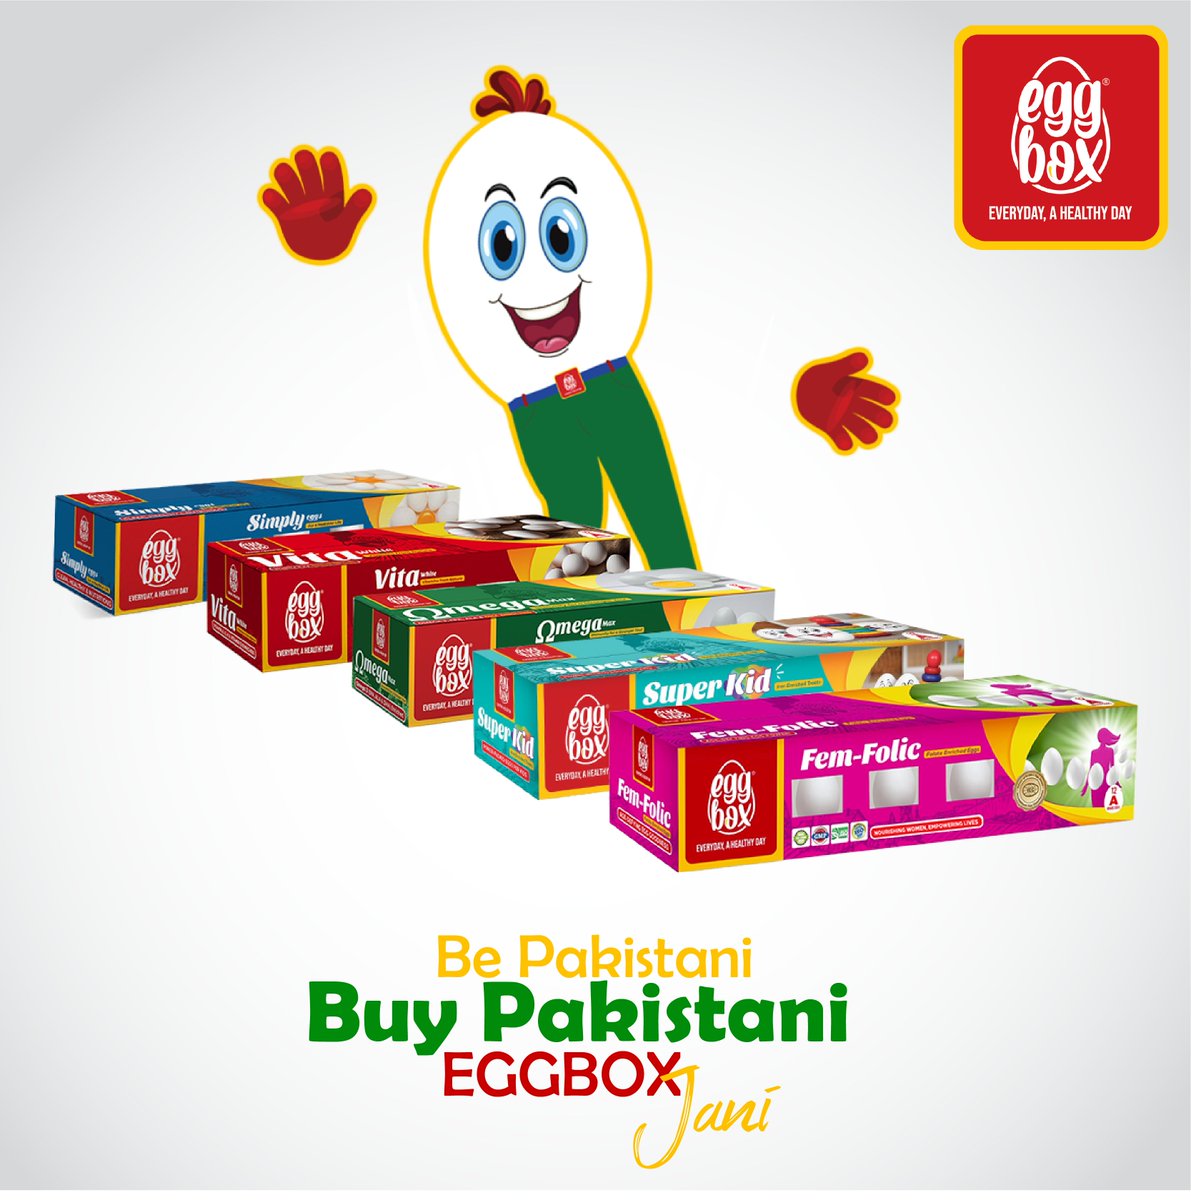 Eggbox is recognized as a Pakistan's Best Egg Brand🥚🥇

#BePakistaniBuyPakistani #BePakistaniBuyPakistaniEggboxJani #PremiumEggBrandInPakistan 🇵🇰 #EveryDayAHealthyDay #OmegaMax #VitaWhite #Simply #SuperKidEggs #FemFolicEggs #GoldenEggAward #YehKoiAamAndaNahi #Trending